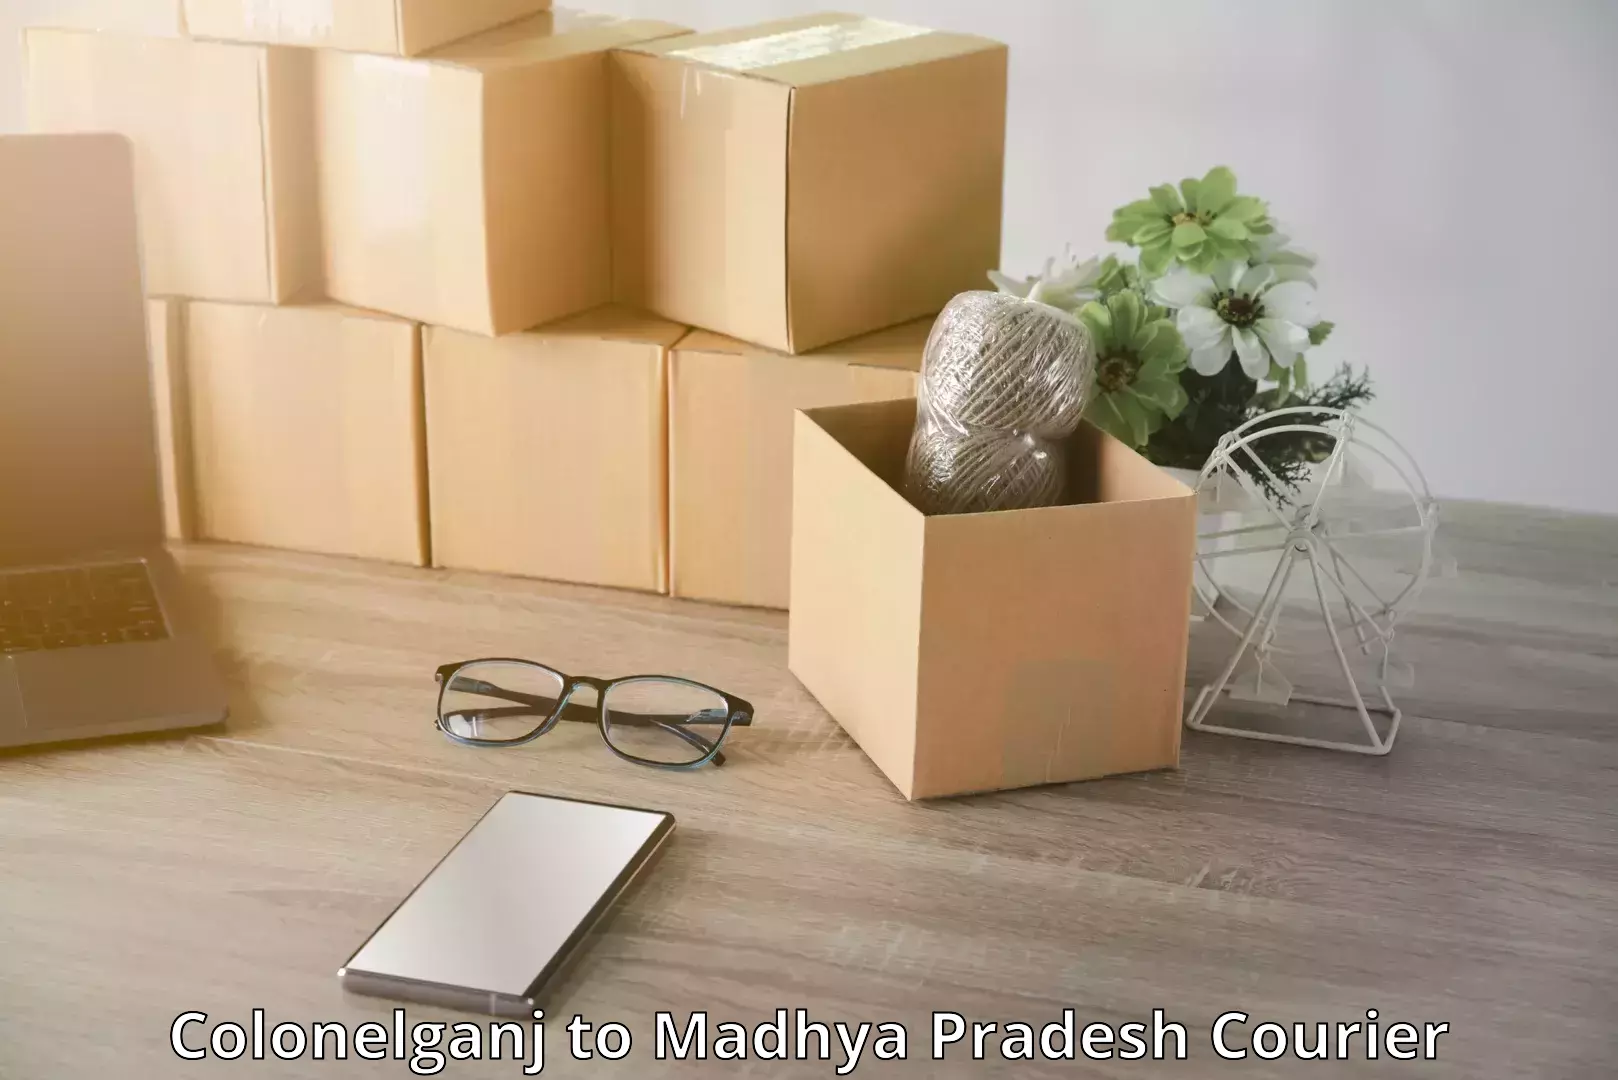 Urgent luggage shipment in Colonelganj to Madhya Pradesh